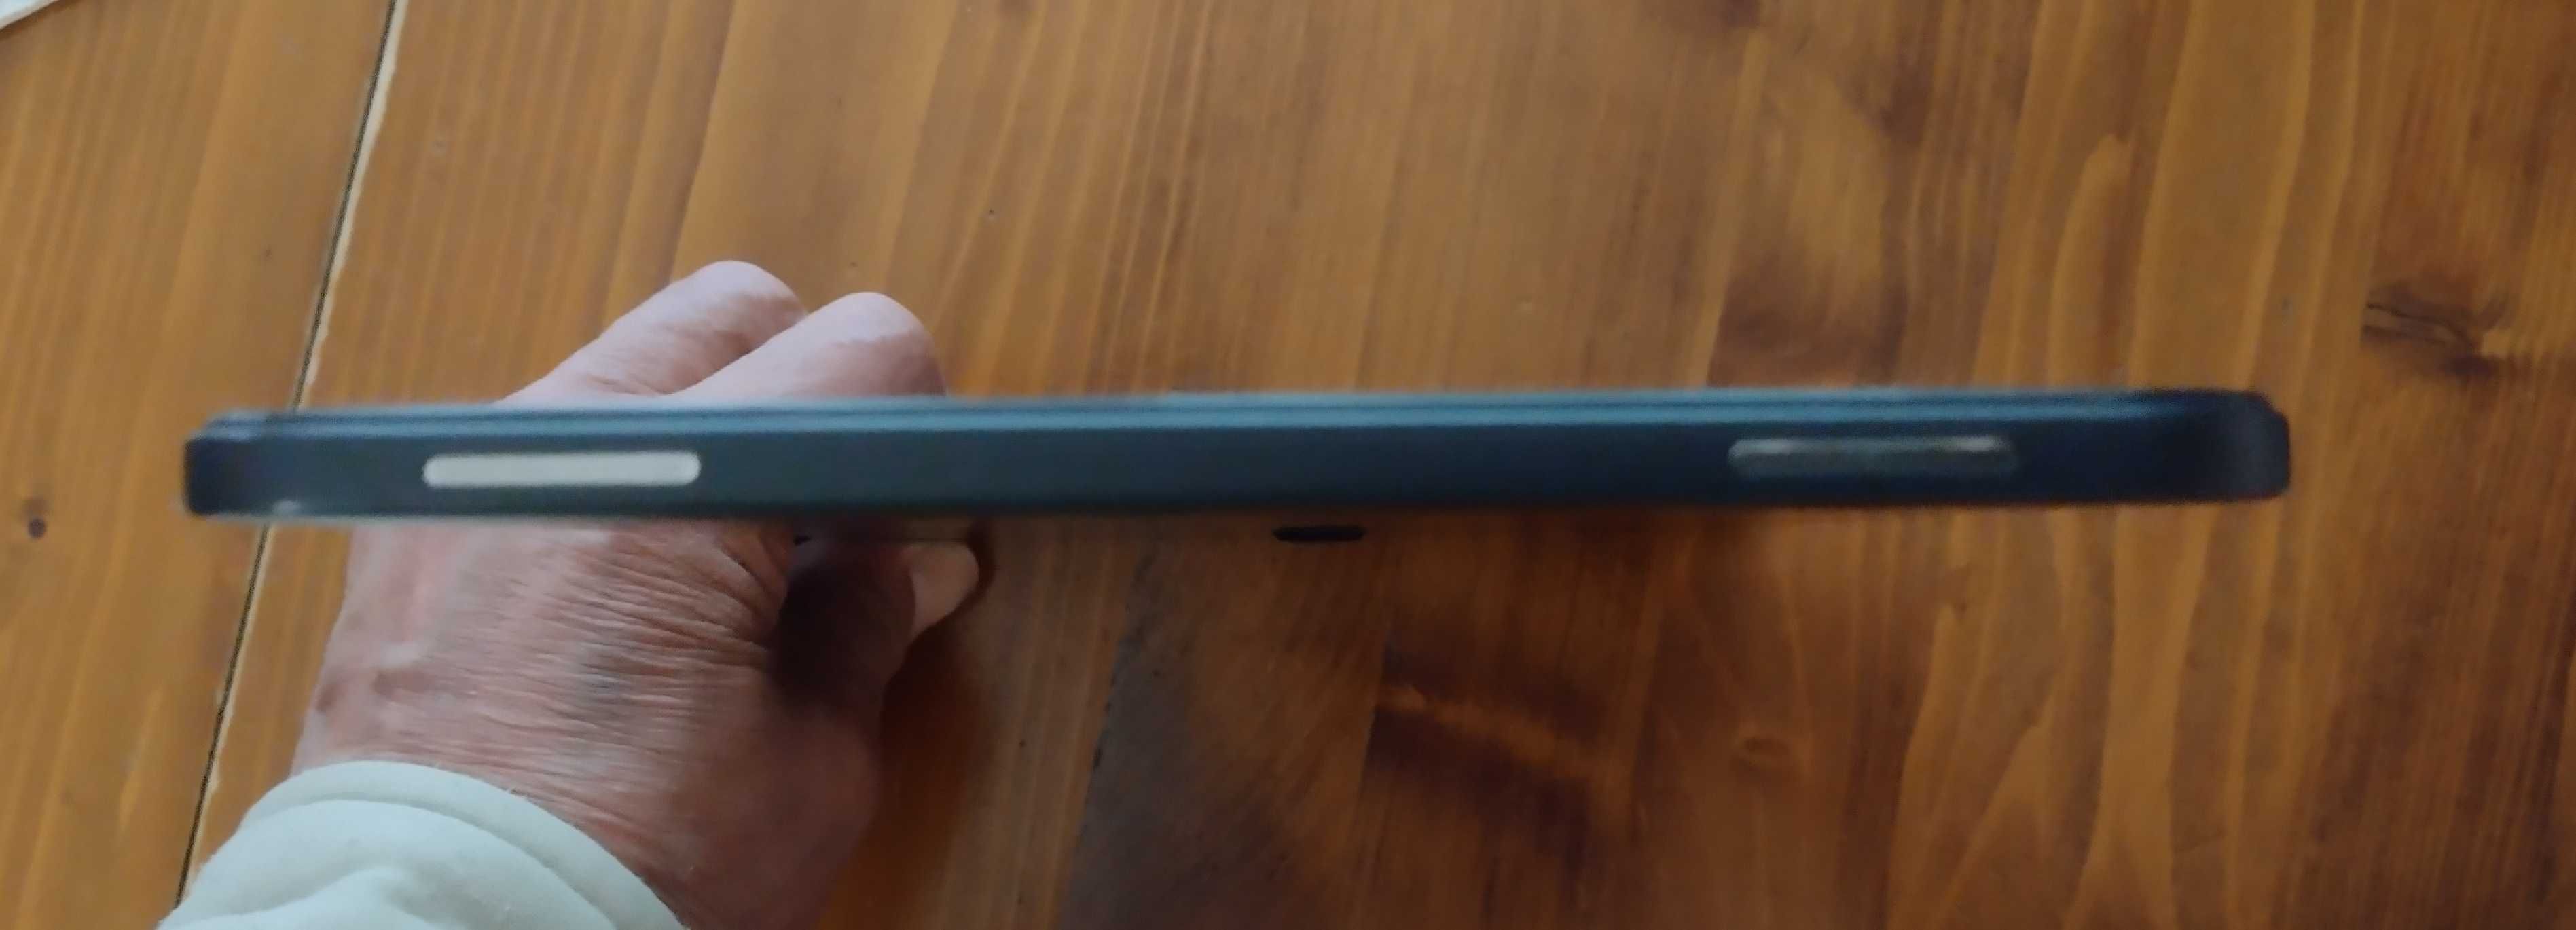 Таблет Samsung Galaxy Tab A 6-10.1 инча